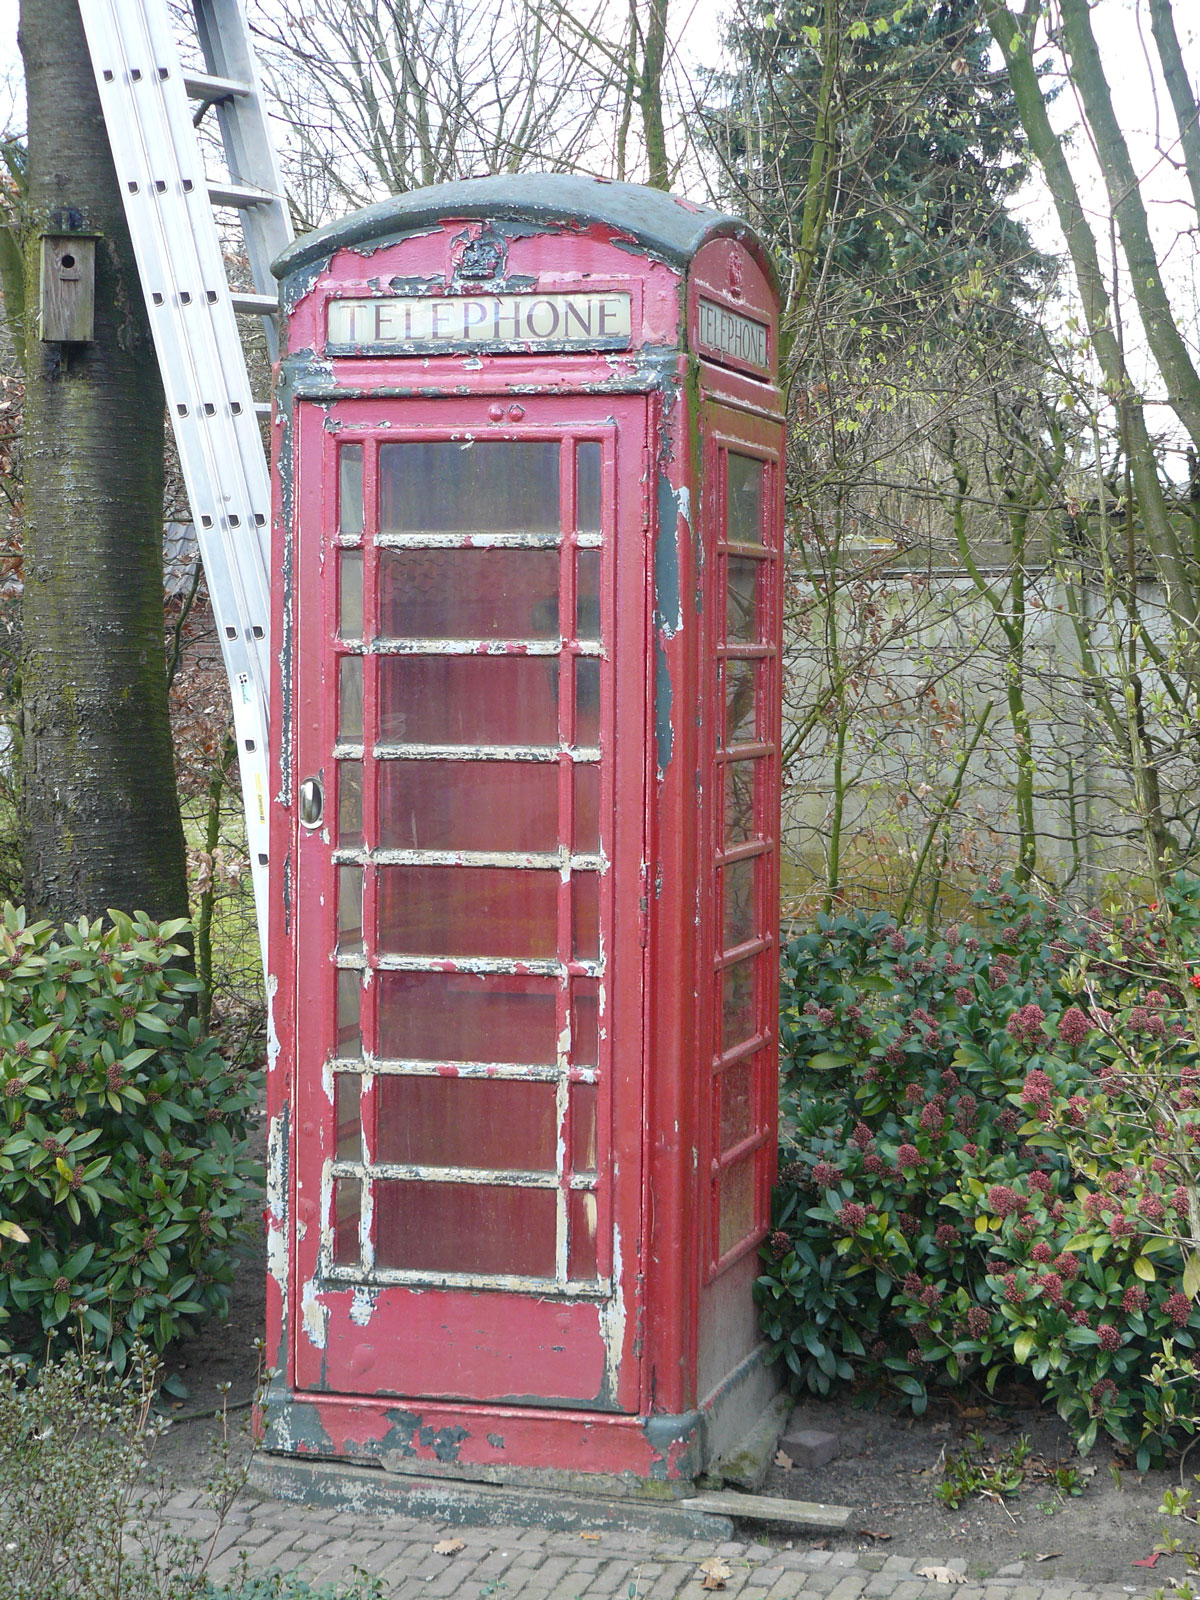 Engelse telefooncel, oude verflaag geheel verwijderd